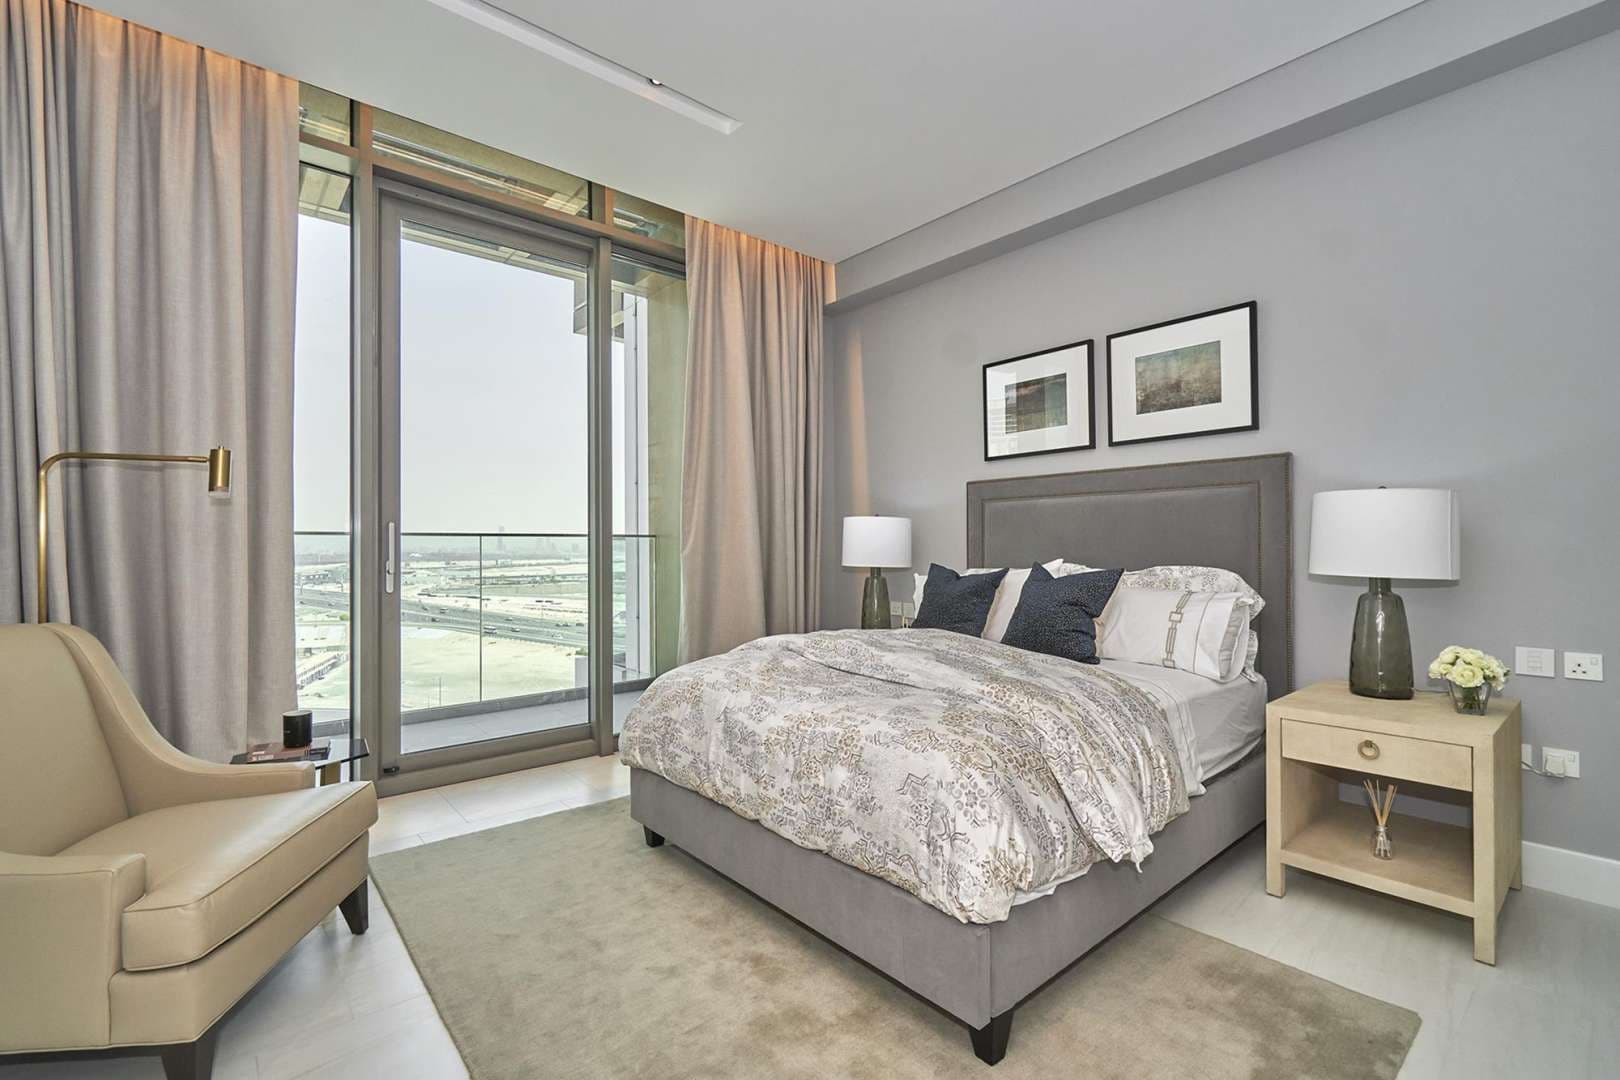 2 Bedroom Apartment For Sale Sls Dubai Hotel Residences Lp06655 1f2b12182a5fe700.jpg